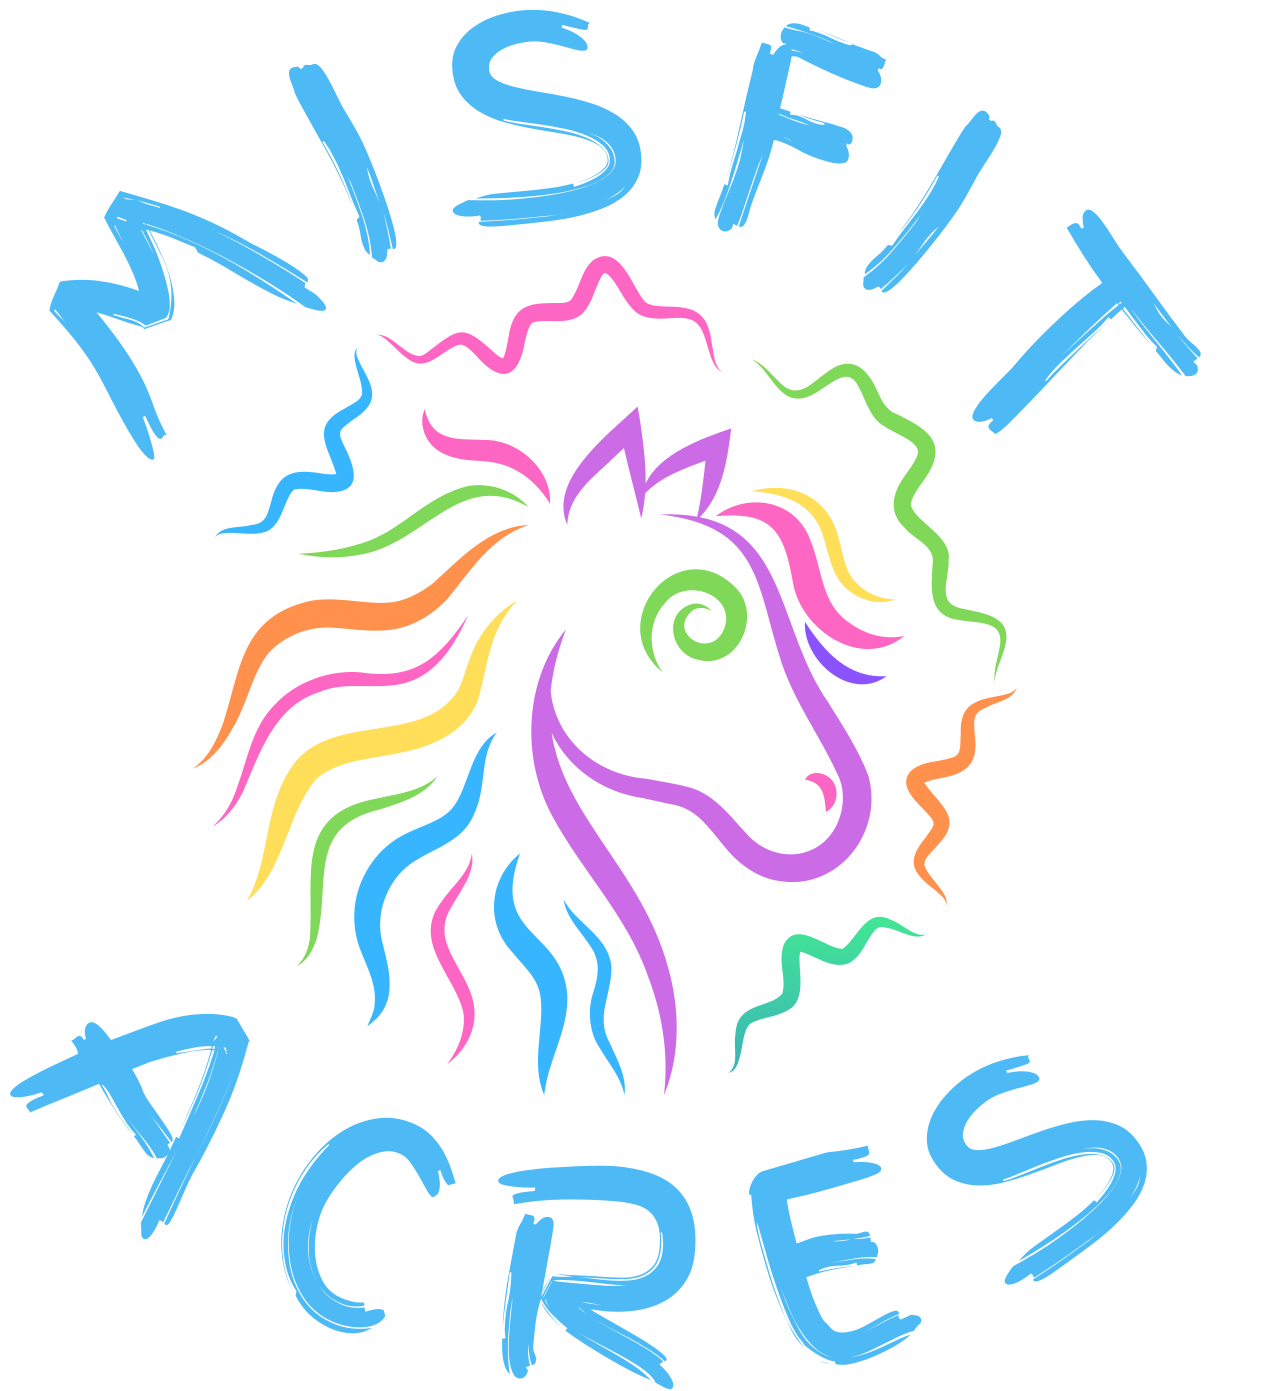 MISFIT's logo